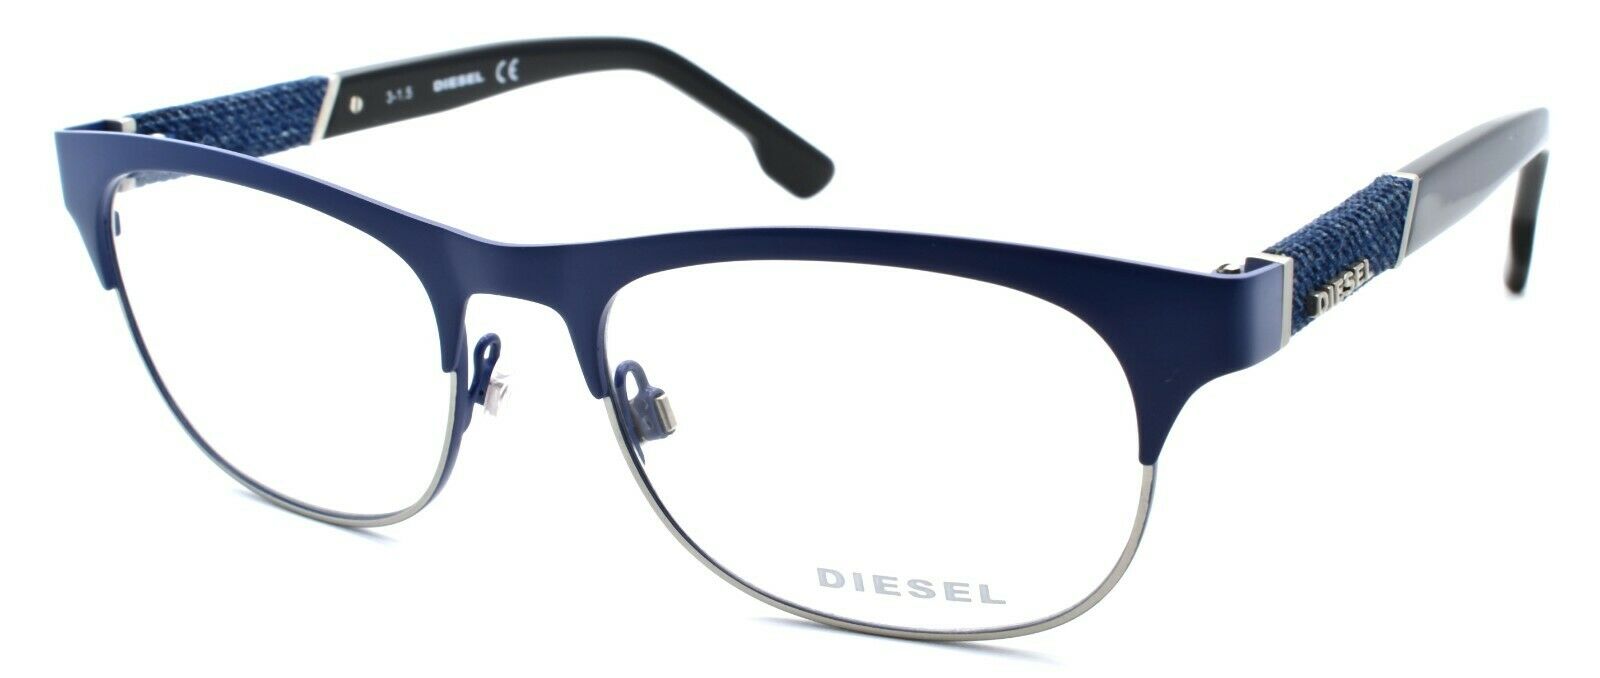 1-Diesel DL5125 091 Unisex Eyeglasses Frames 52-17-145 Matte Blue Silver / Denim-664689666980-IKSpecs